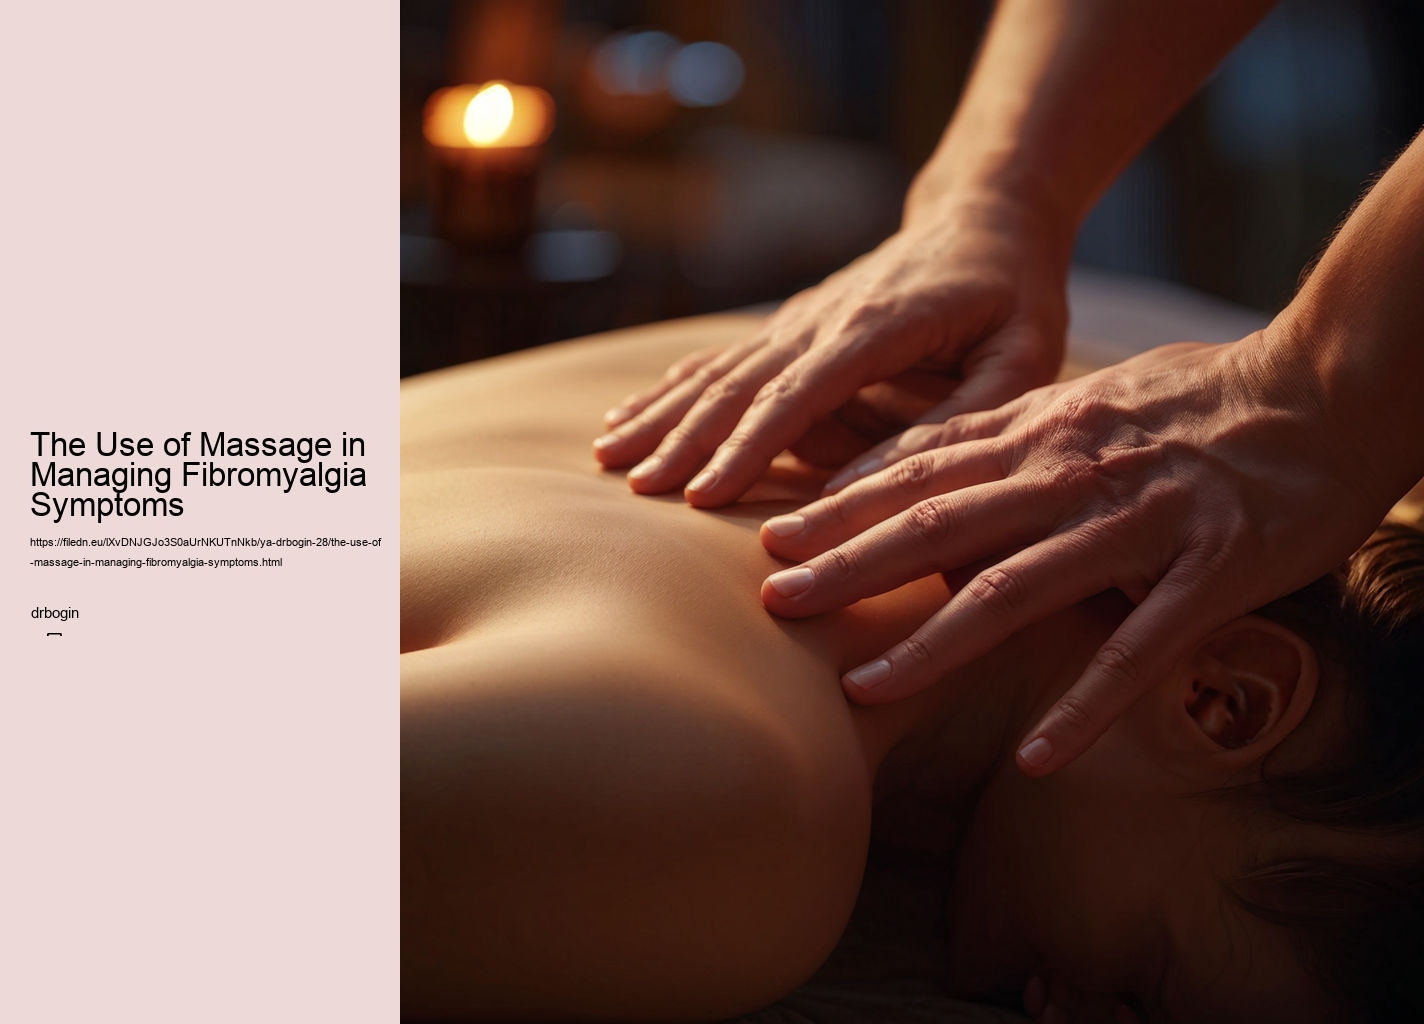 The Use of Massage in Managing Fibromyalgia Symptoms